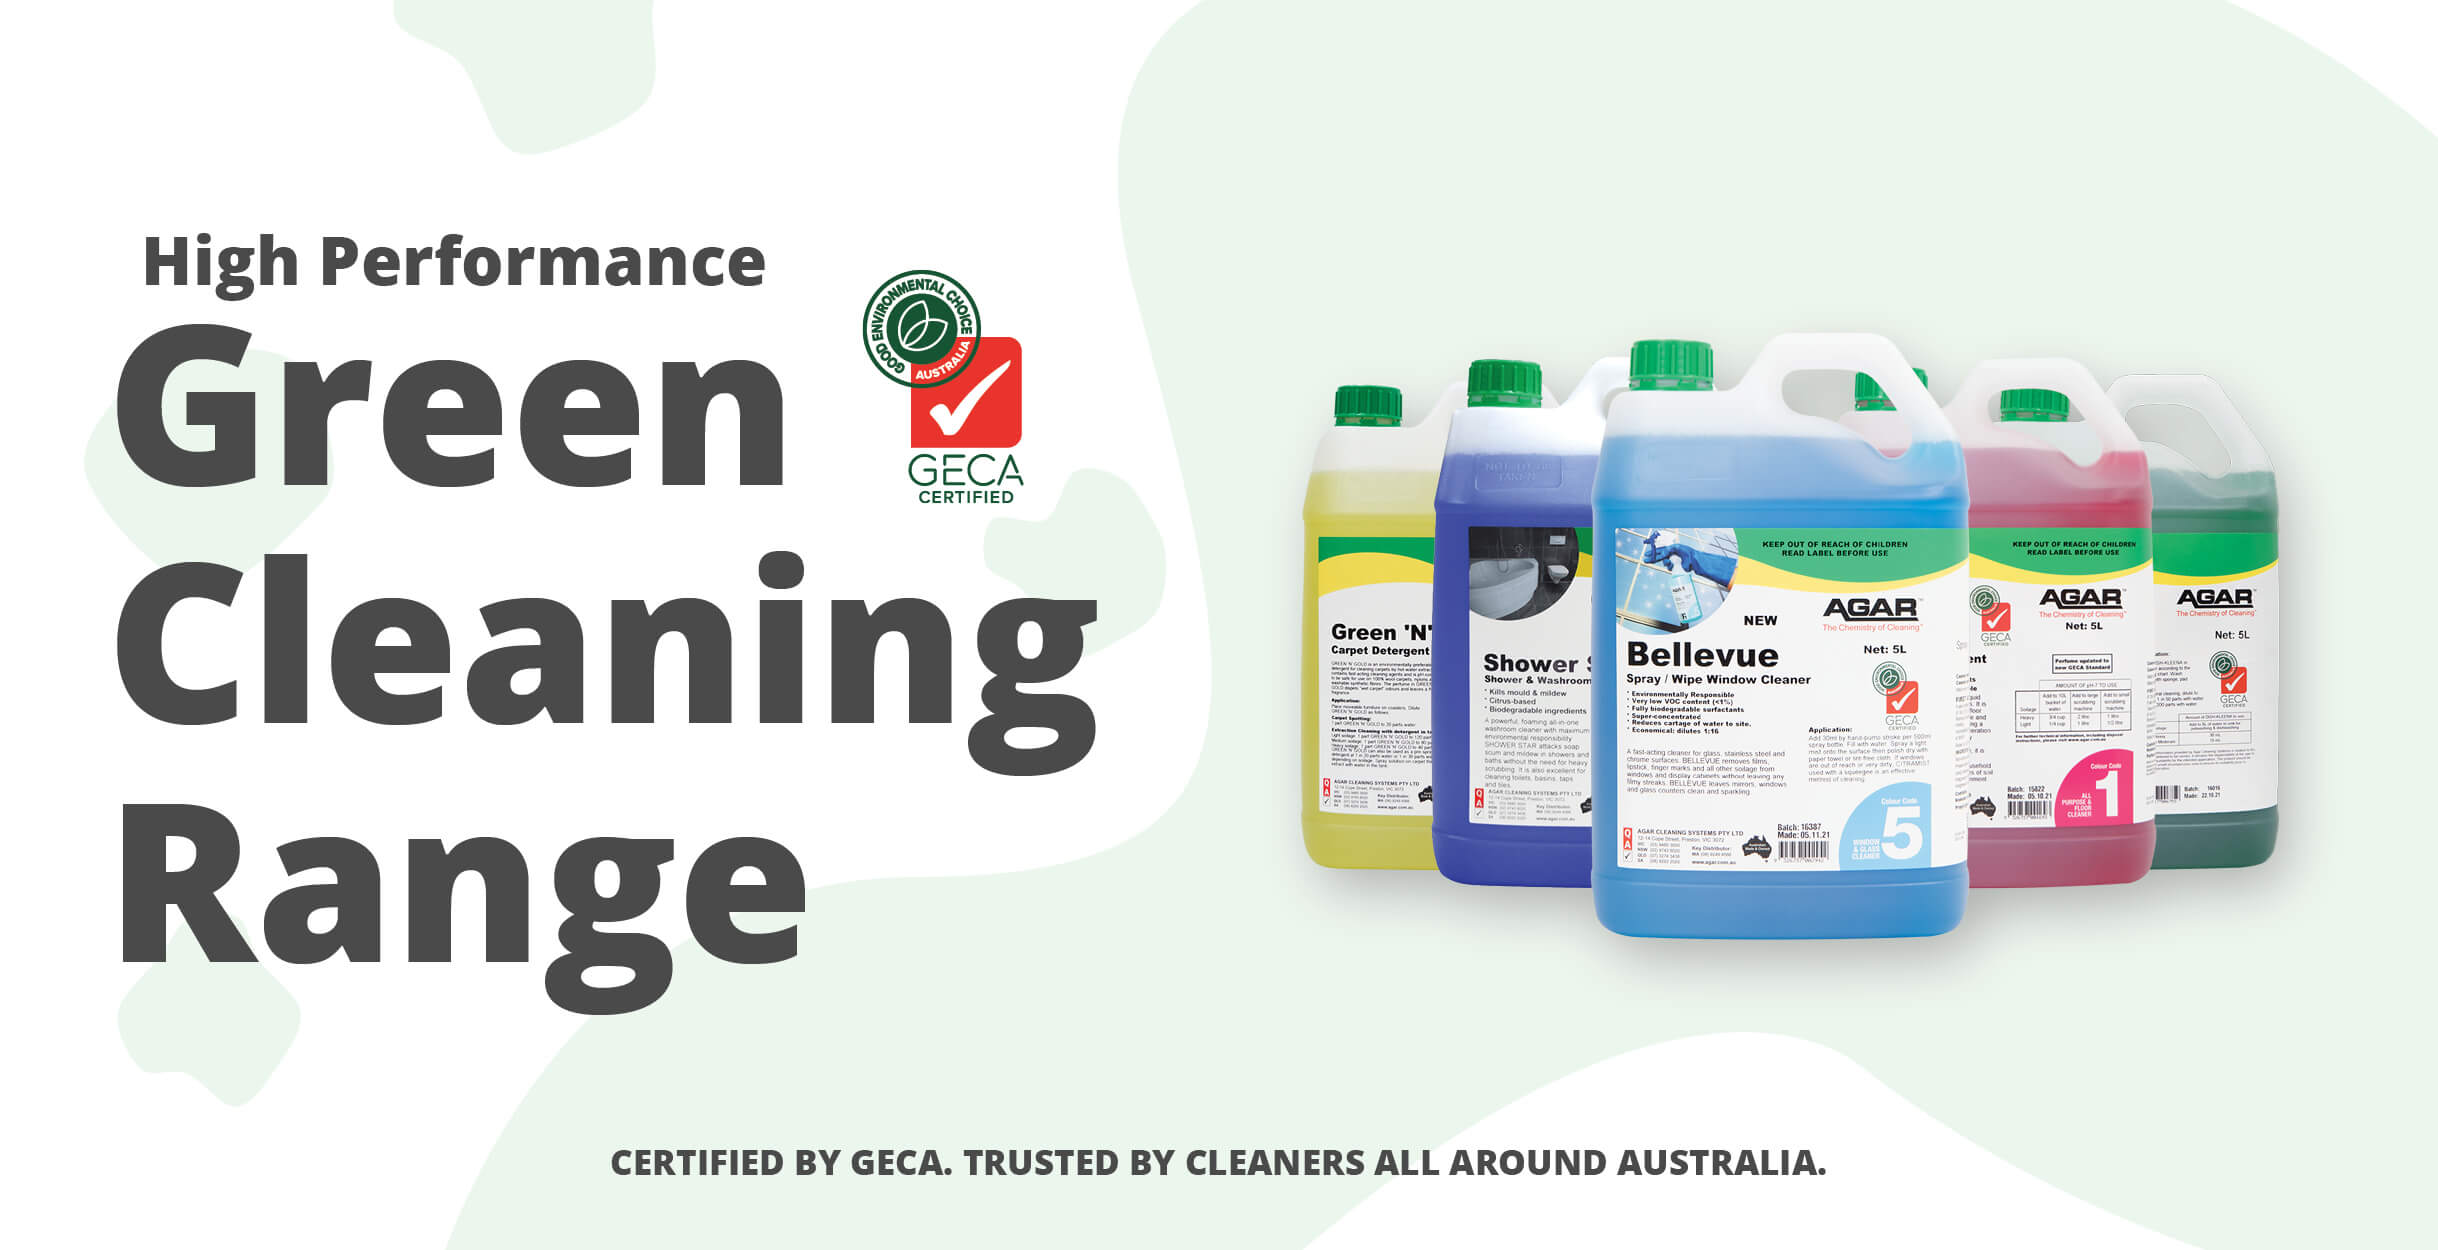 Agar Green Cleaning Range